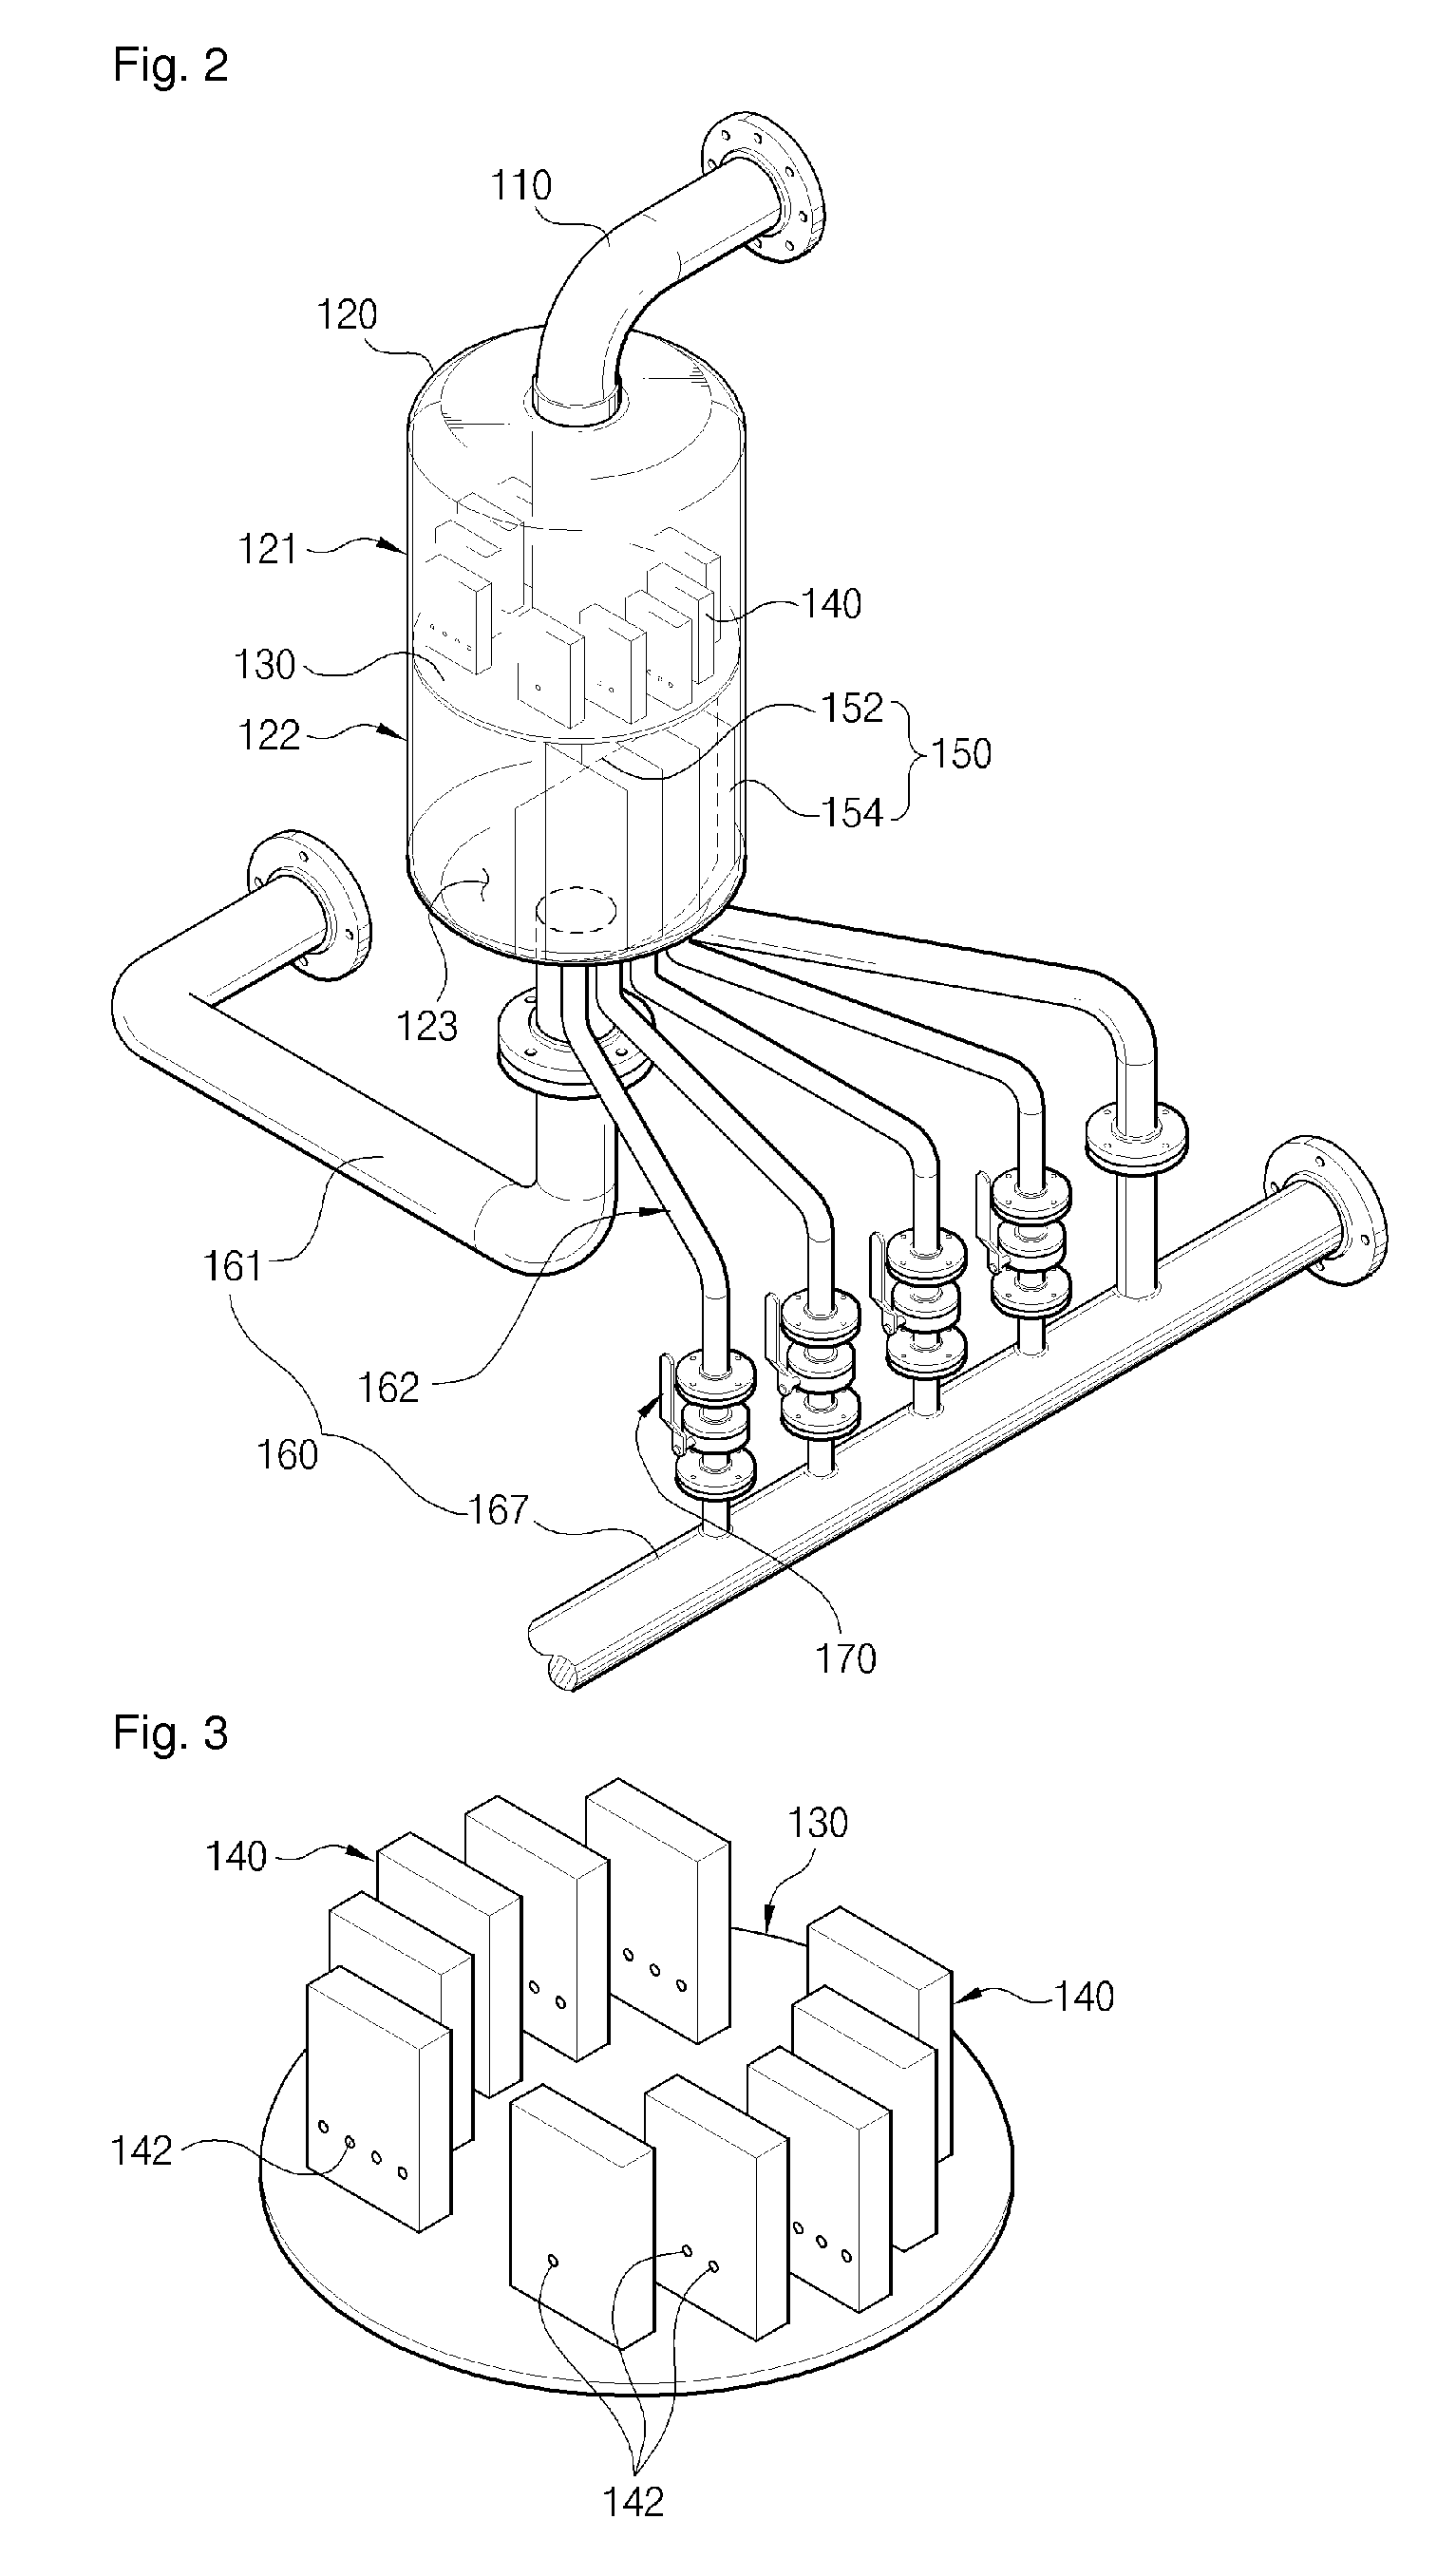 Liquid distribution device